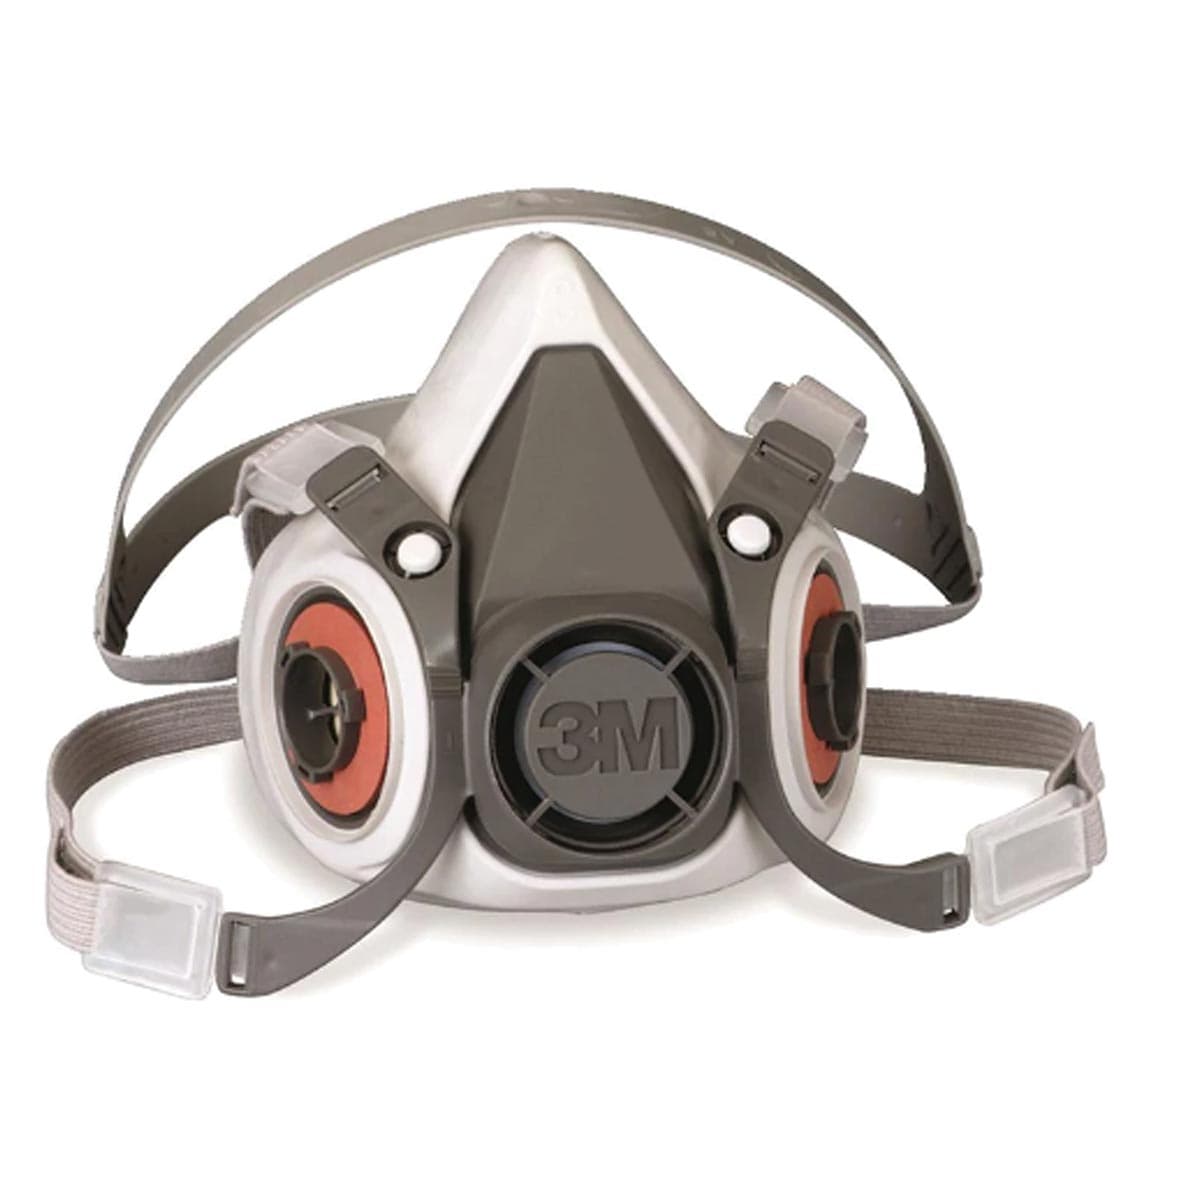 3M Half Mask Respirator Kit with OV/P100 Filter Cartridges, Small